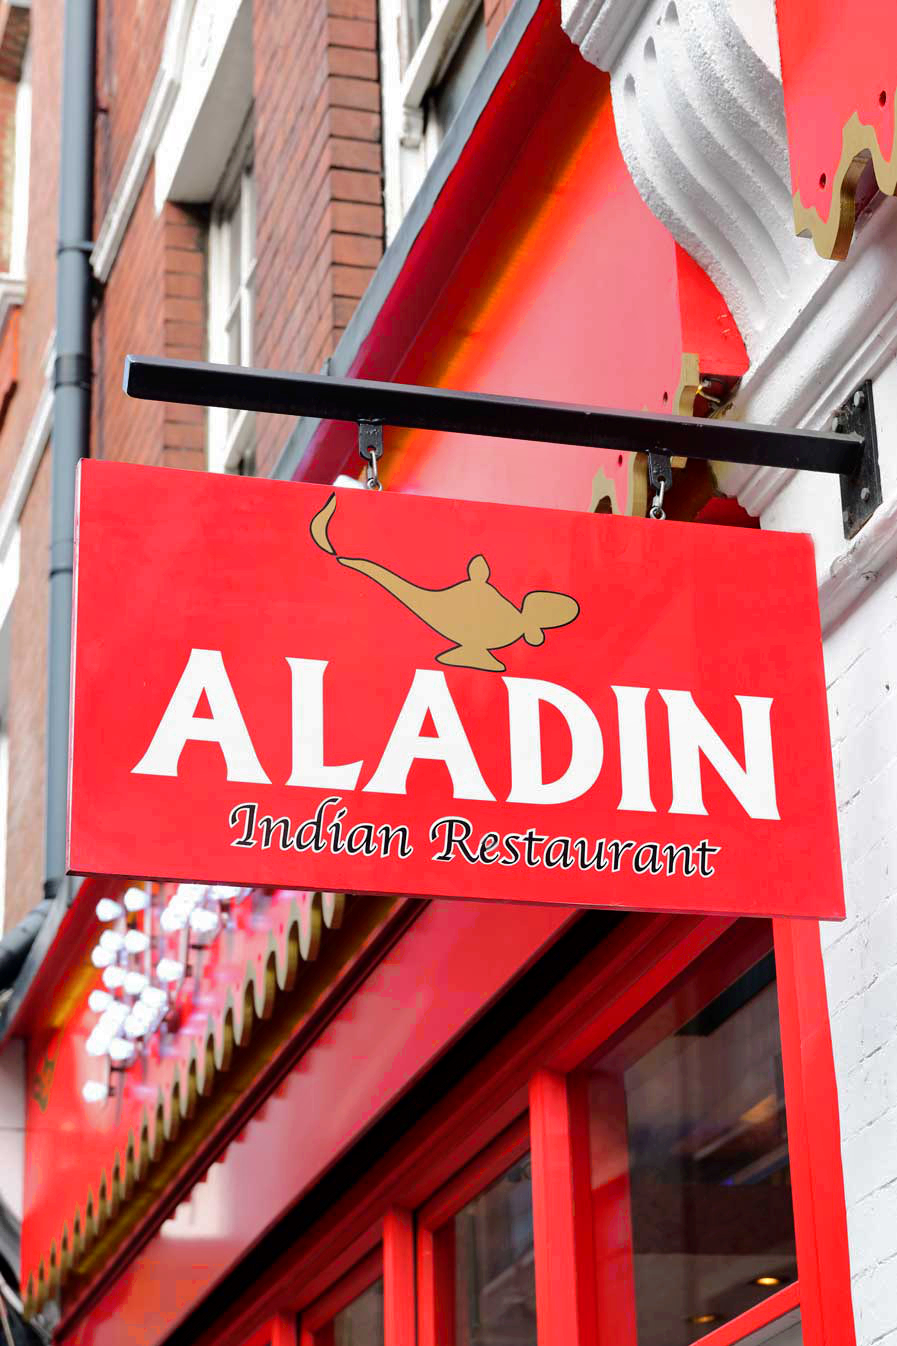 Aladin restaurant, Brick Lane, East End of London.